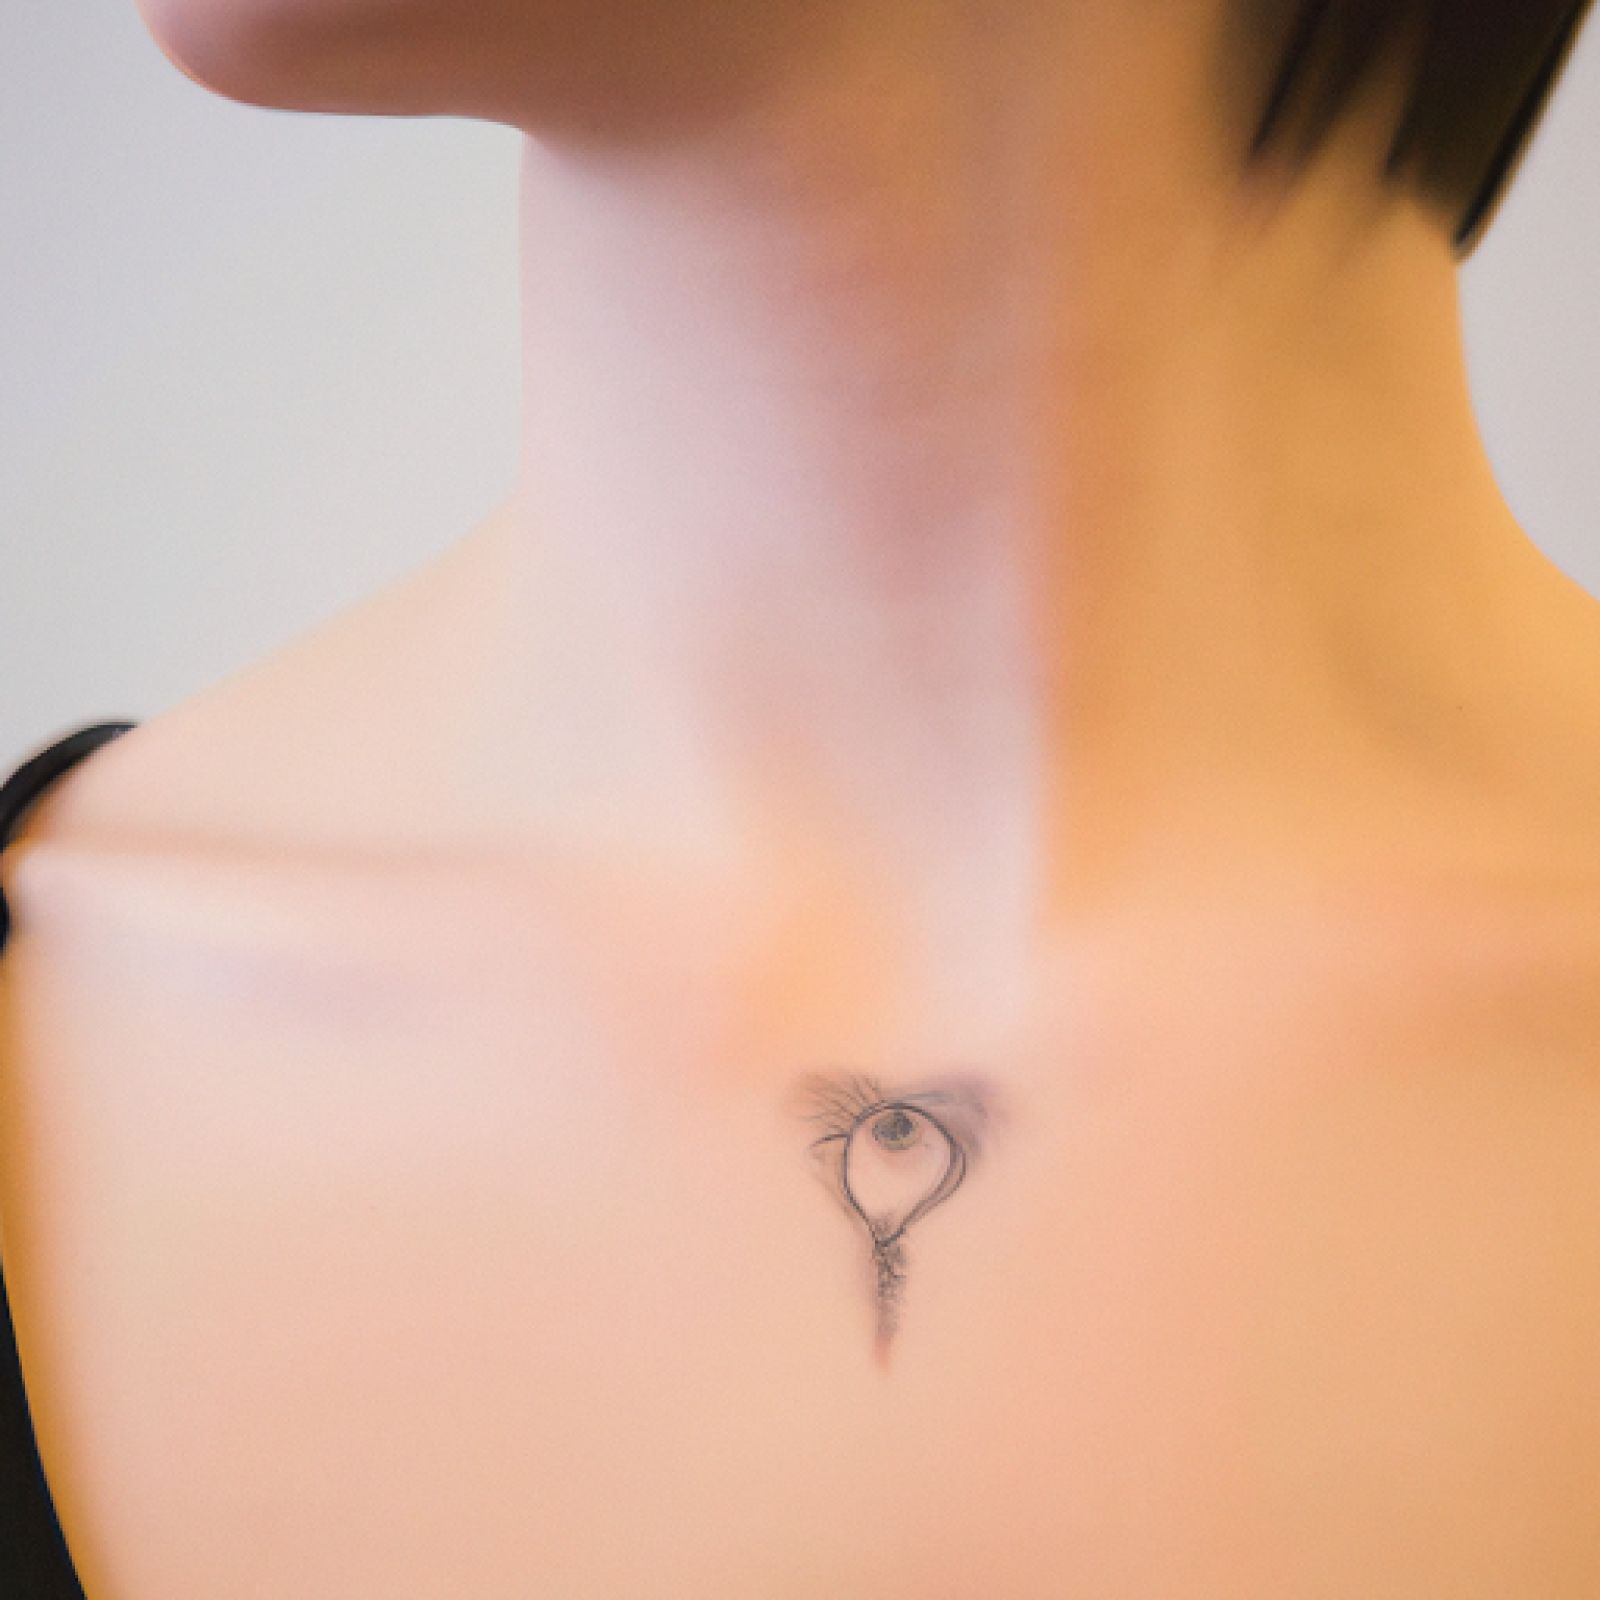 Heart tattoo on neck for women